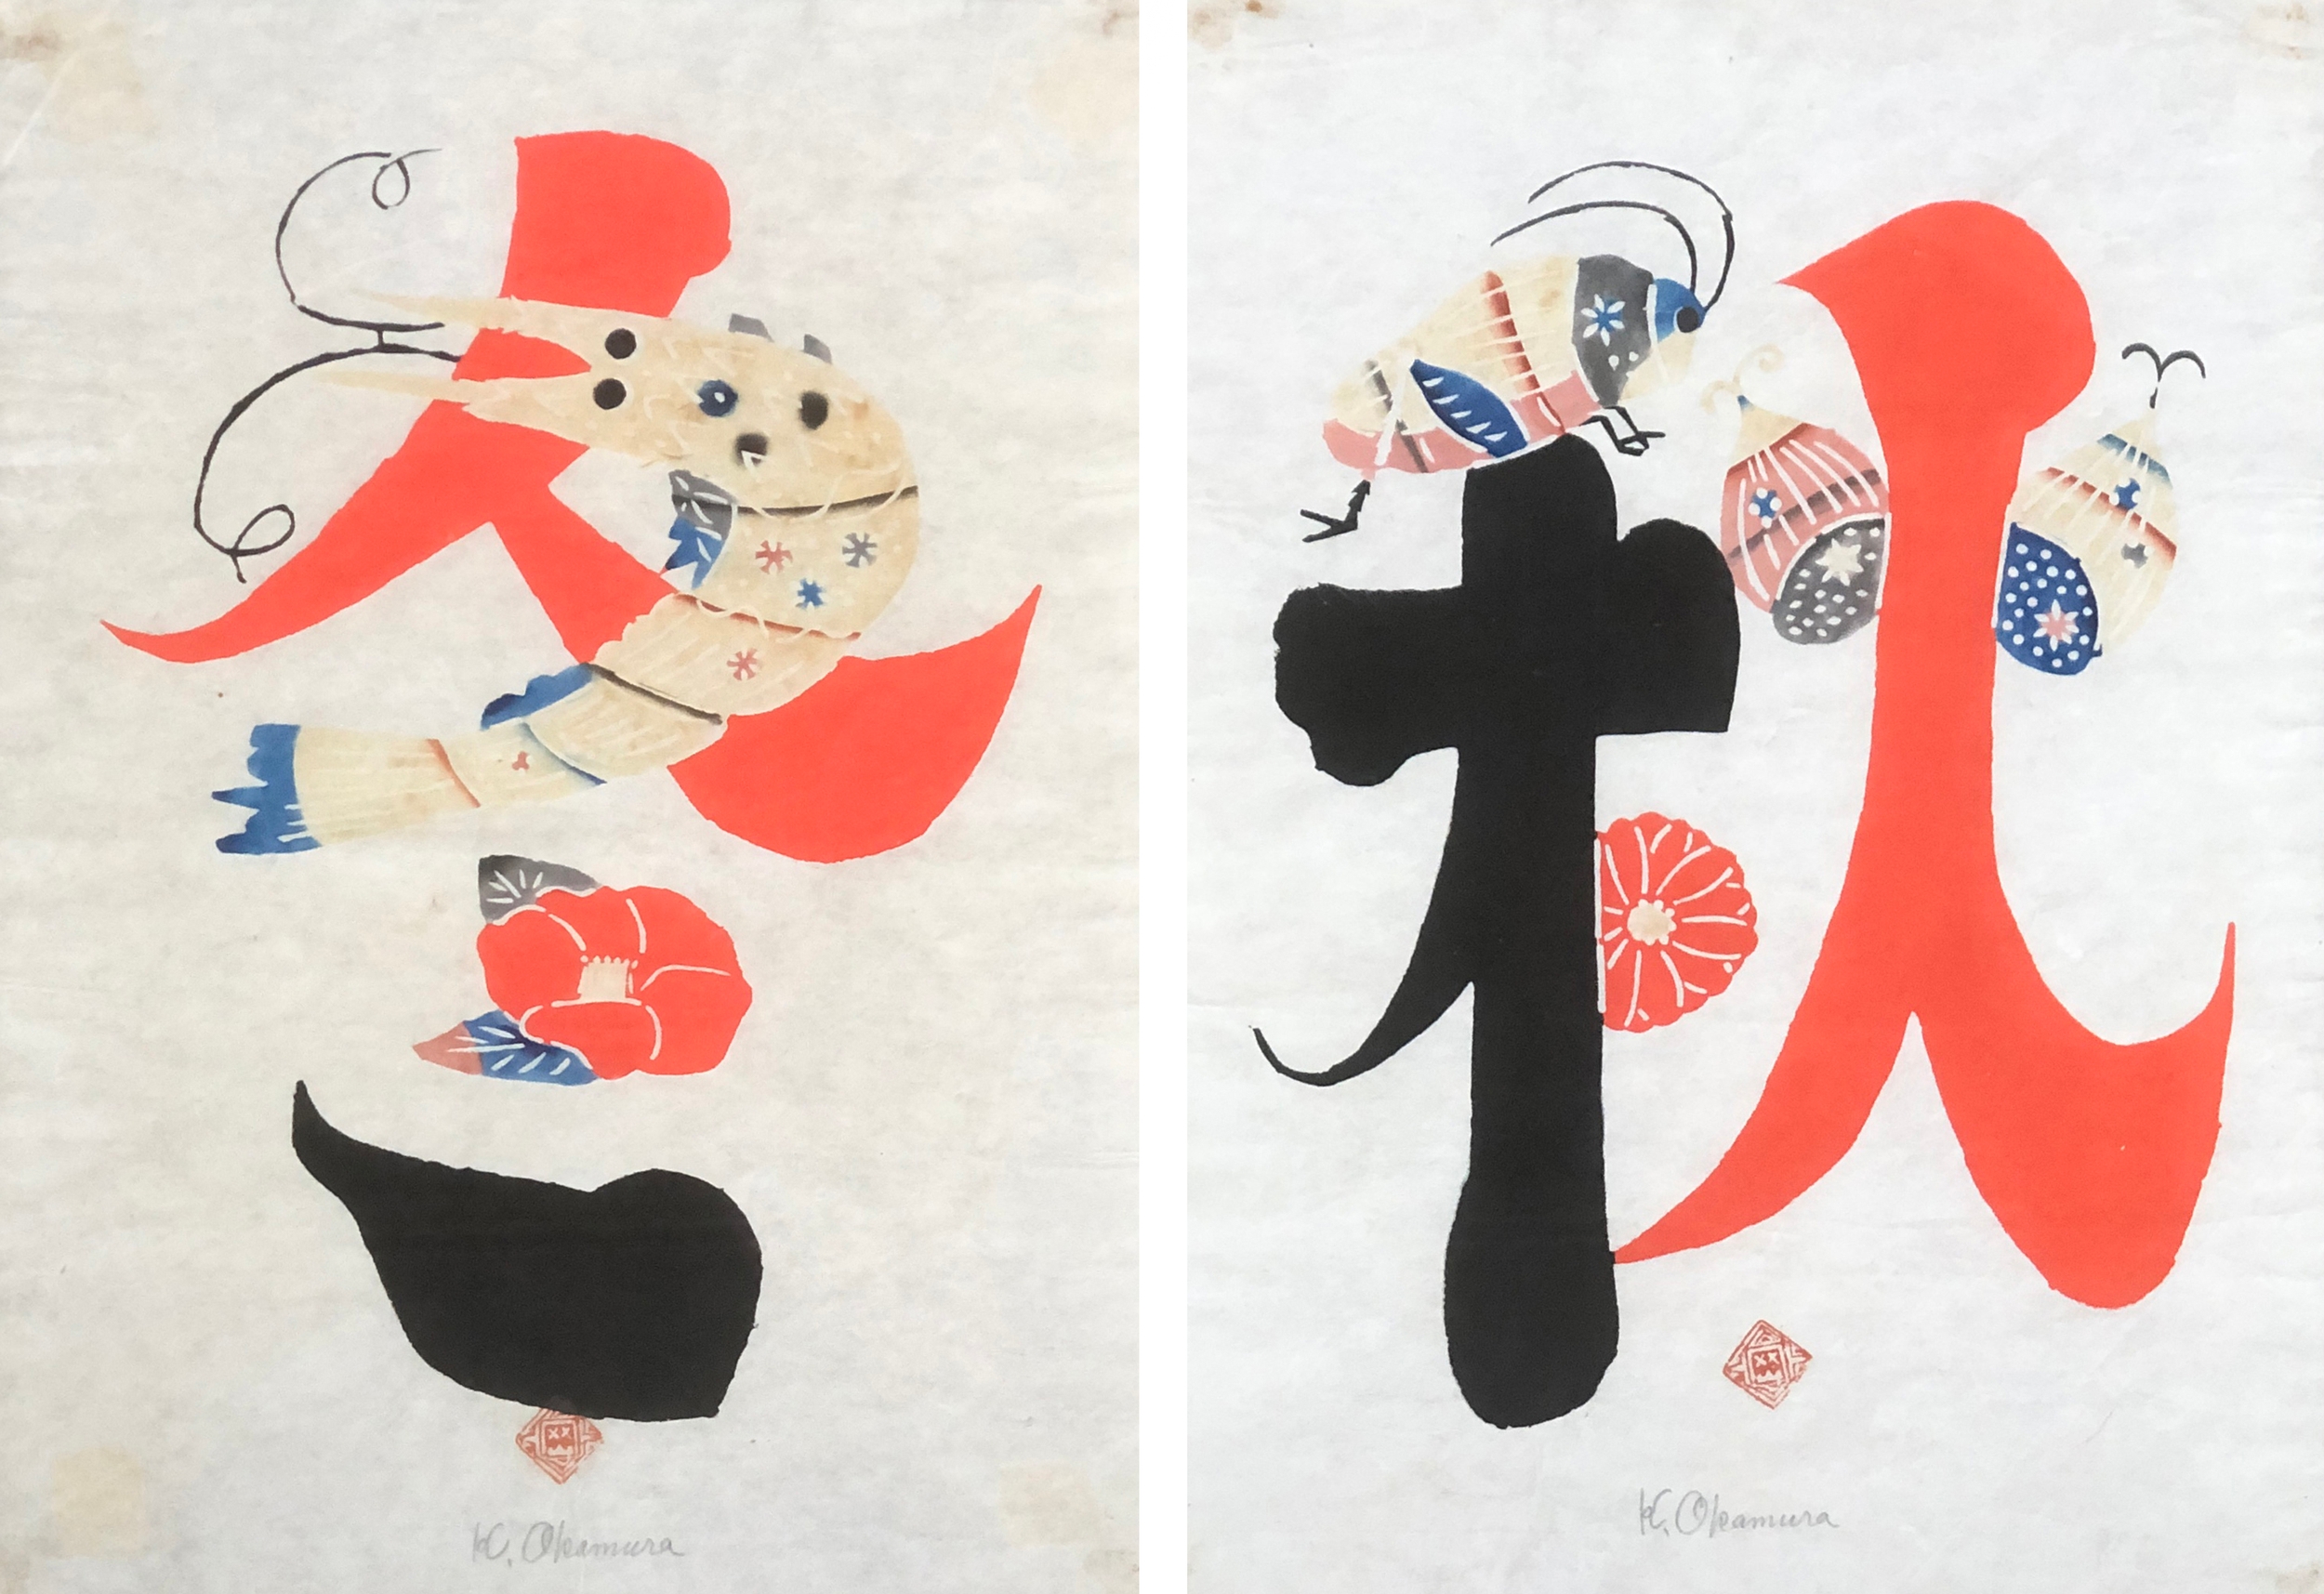 Okamura Kichiemon (Japanese, 1916-2002) Four Seasons - 'Autumn', Kanji Letter "Aki" composed with